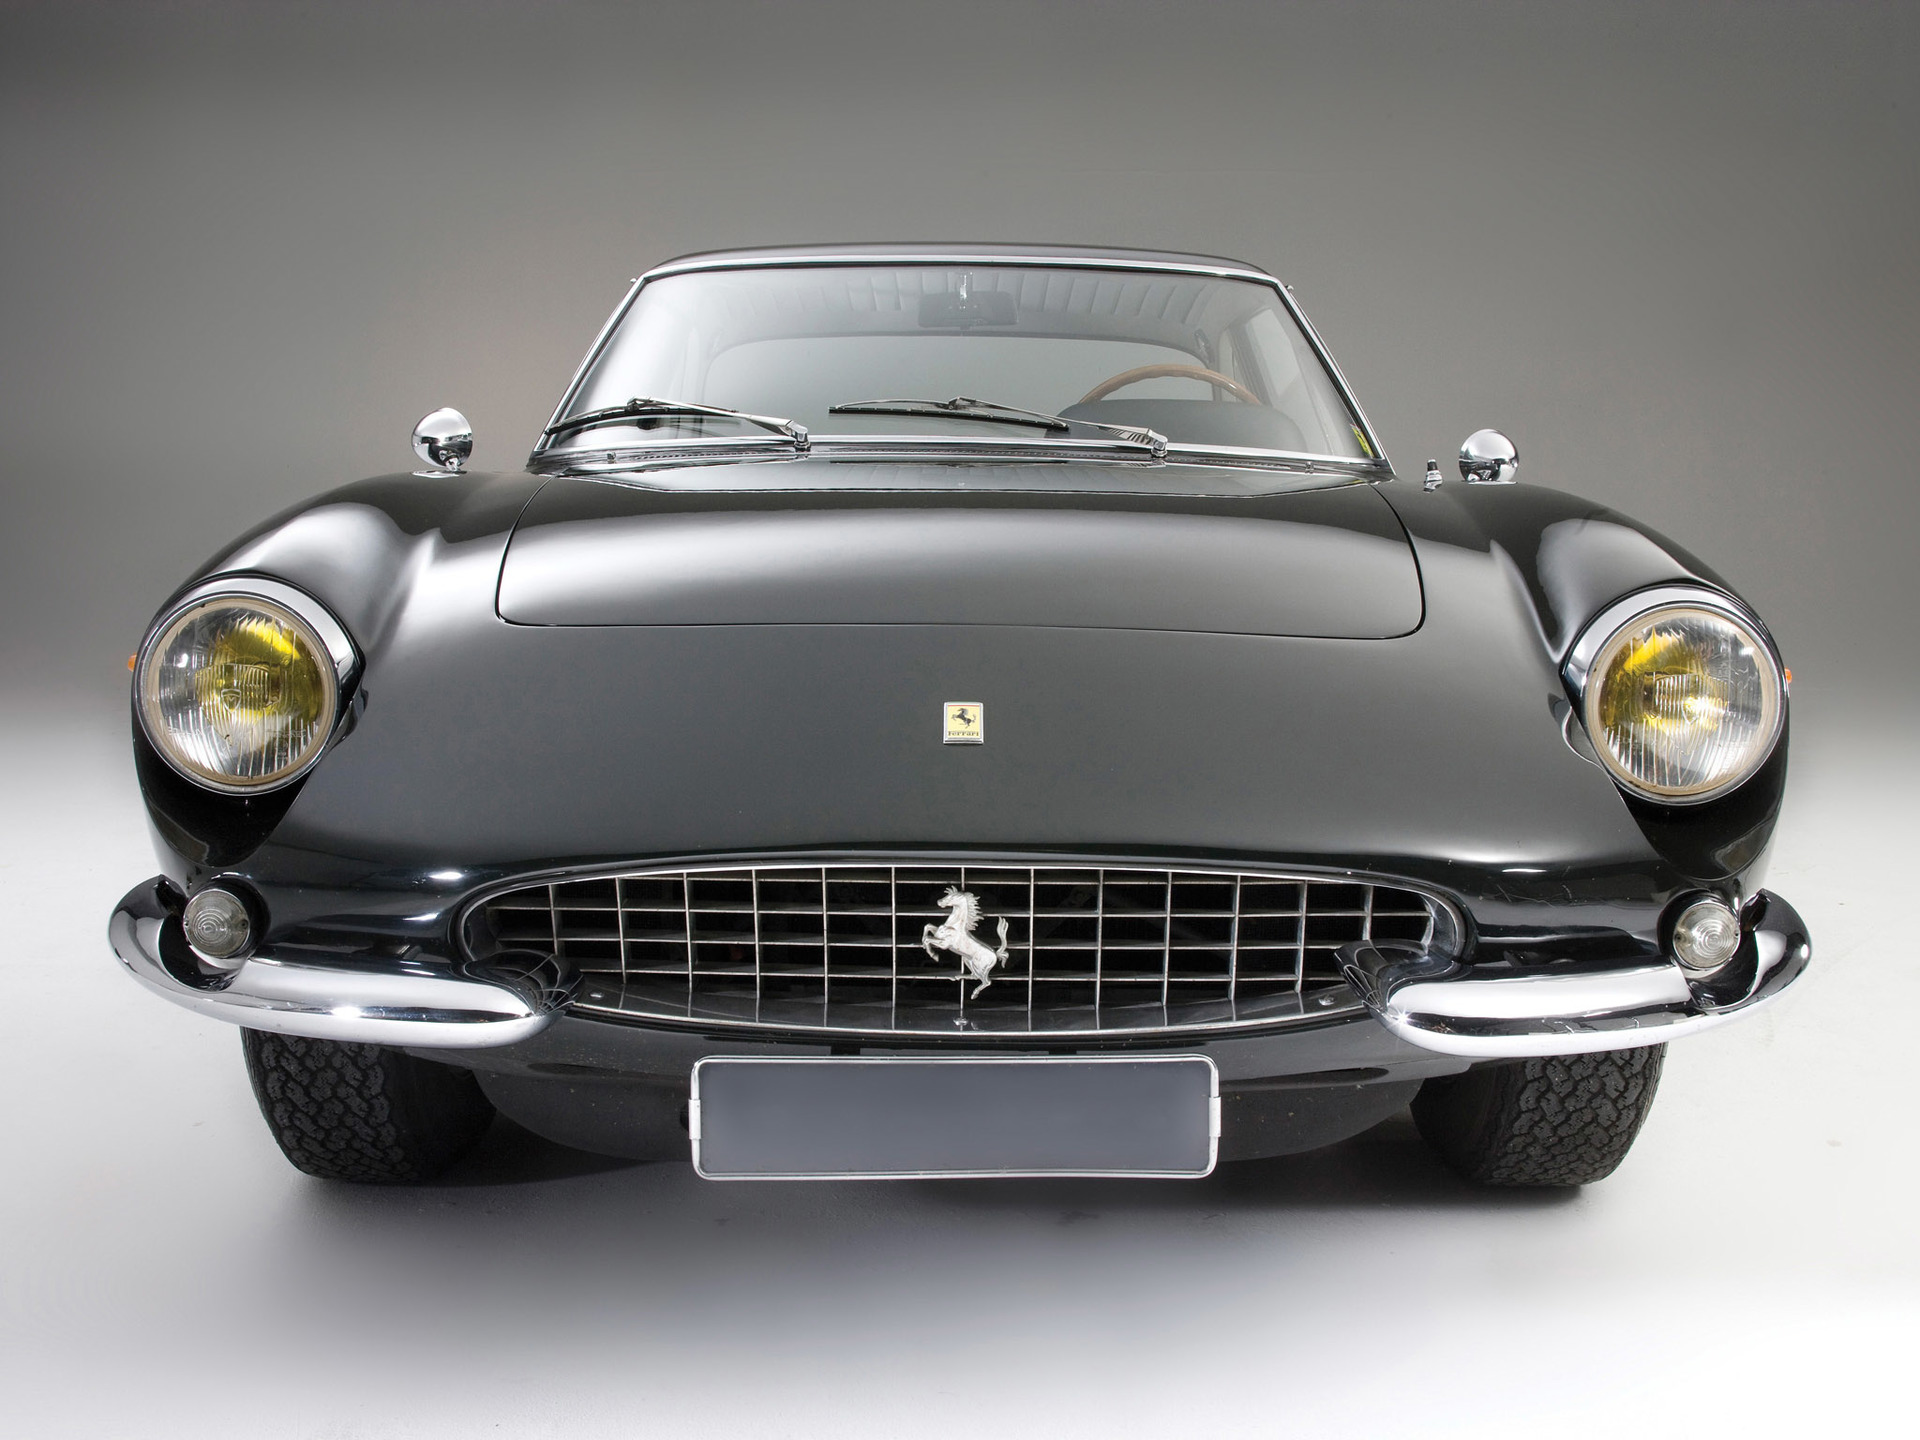 1964 Ferrari 500 Superfast 004 9785